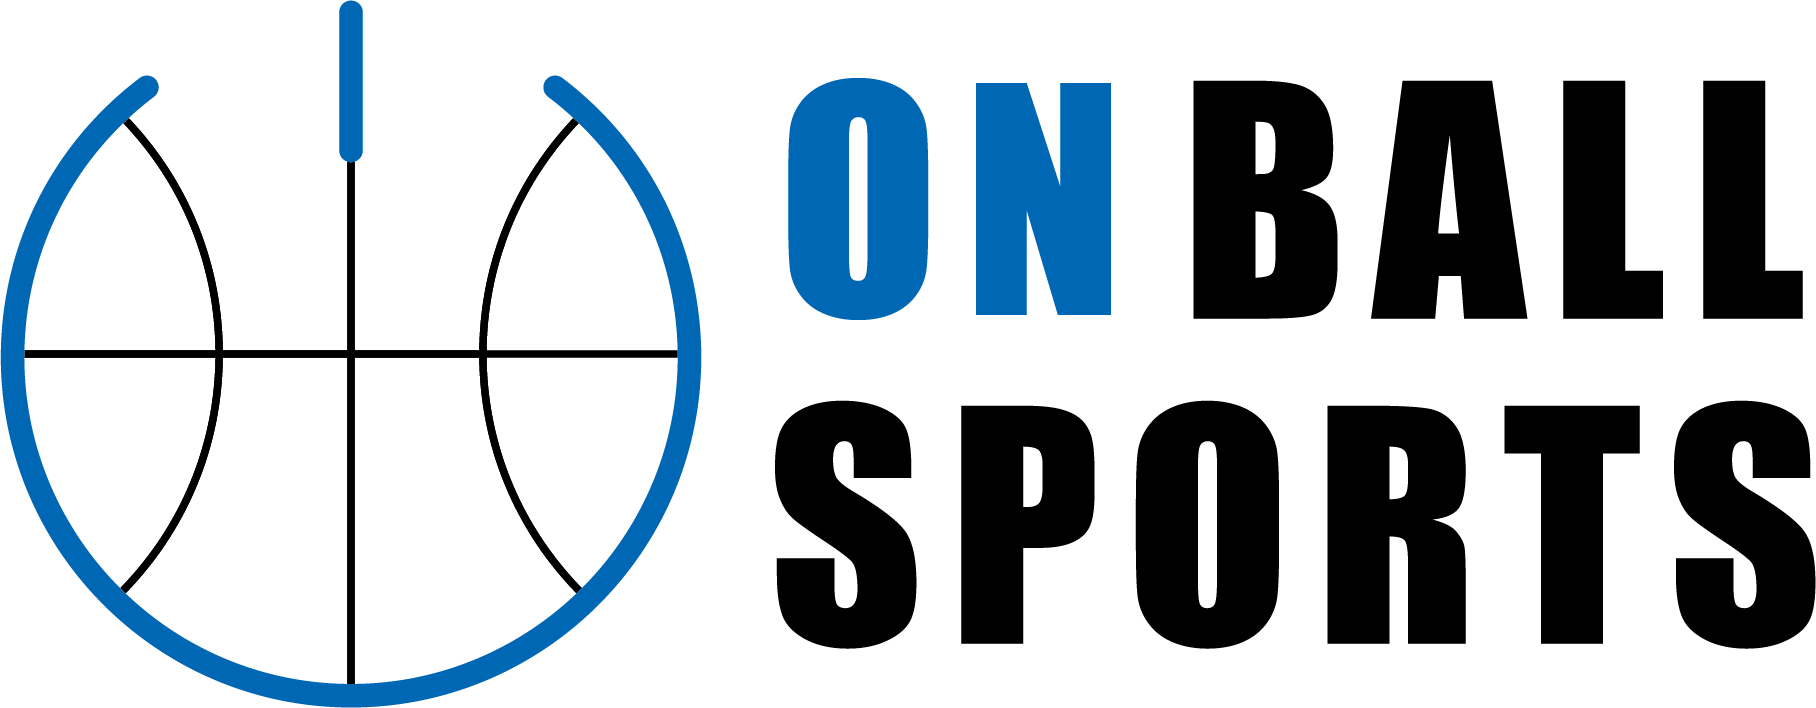 On Ball Final Logo - Horizontal